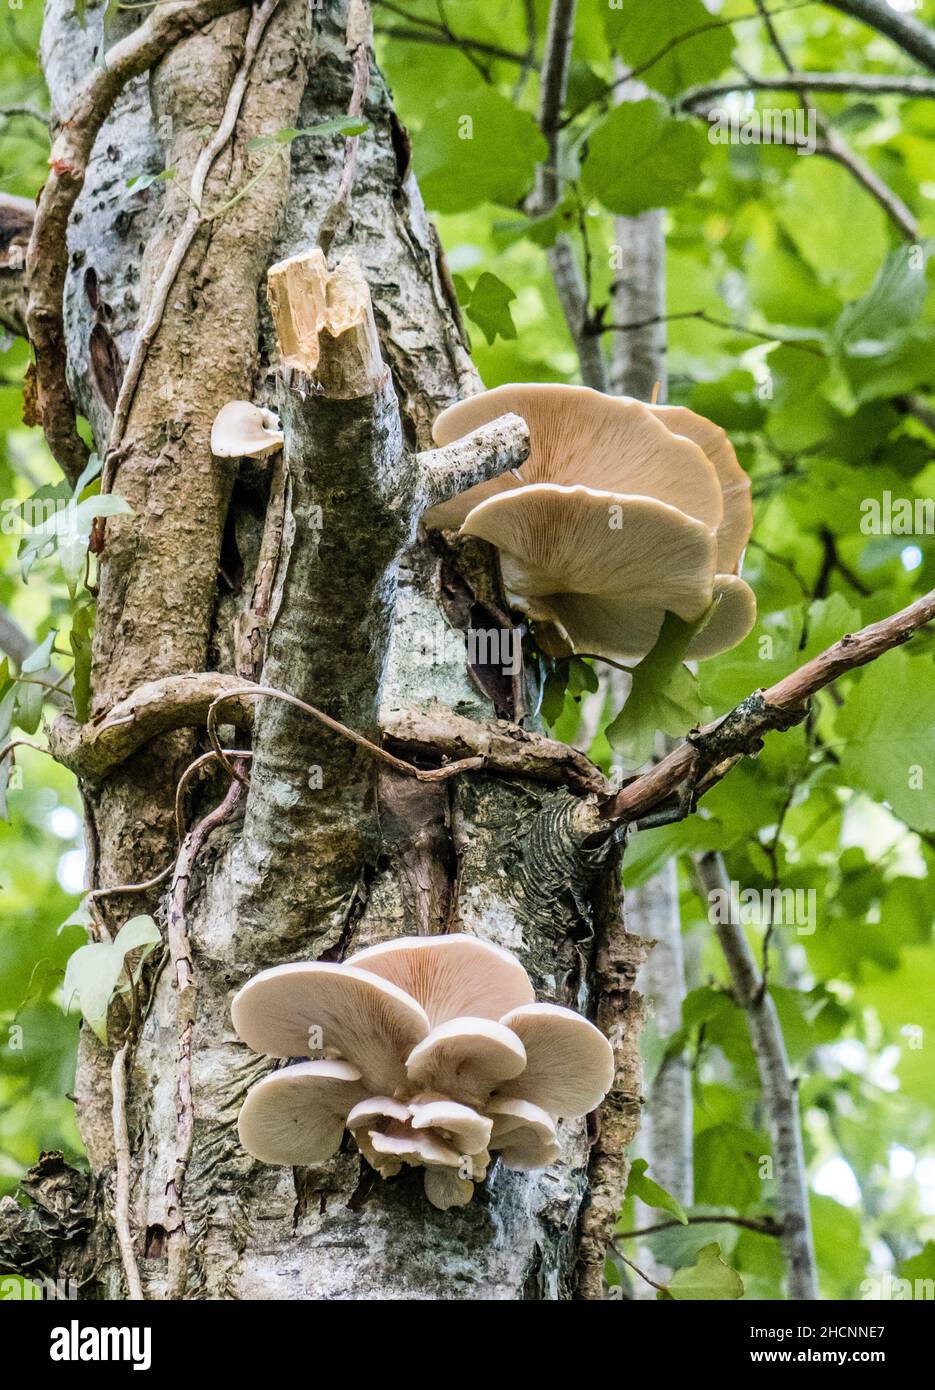 UK, England, Devon. The edible Oyster Mushroom growing wild on a dead birch tree. Stock Photo